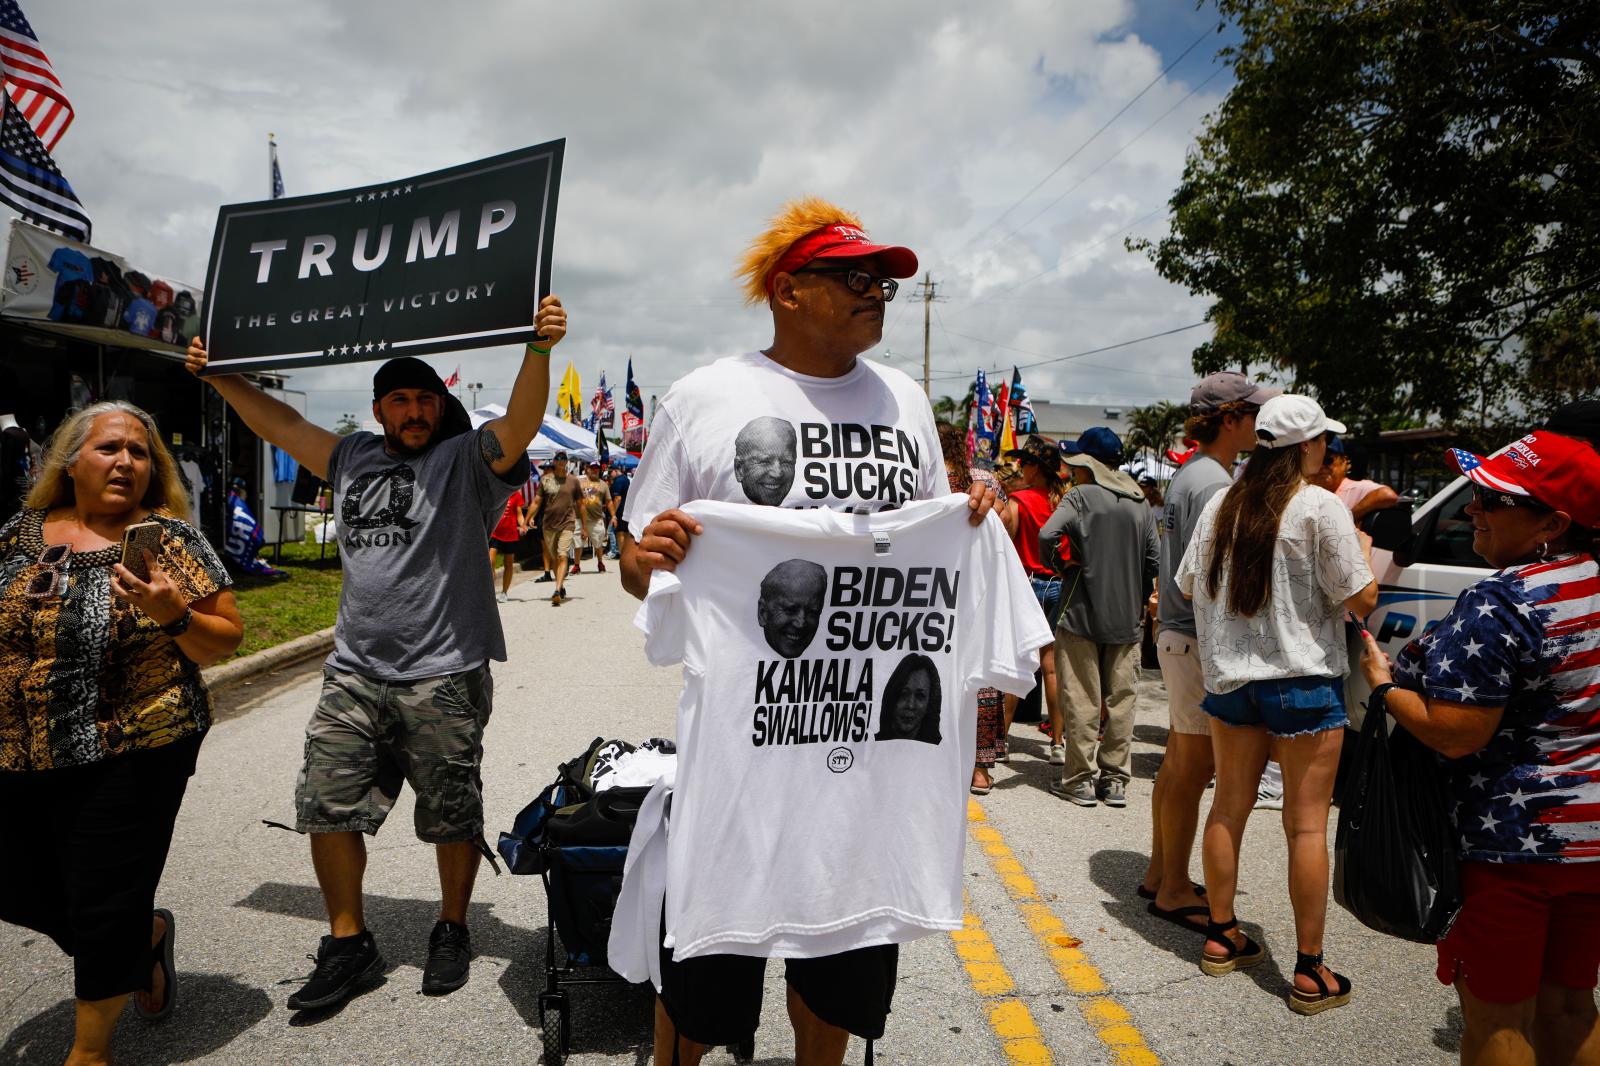 SARASOTA, FL - JULY 03: People ...a Marie Uzcategui/Getty Images)